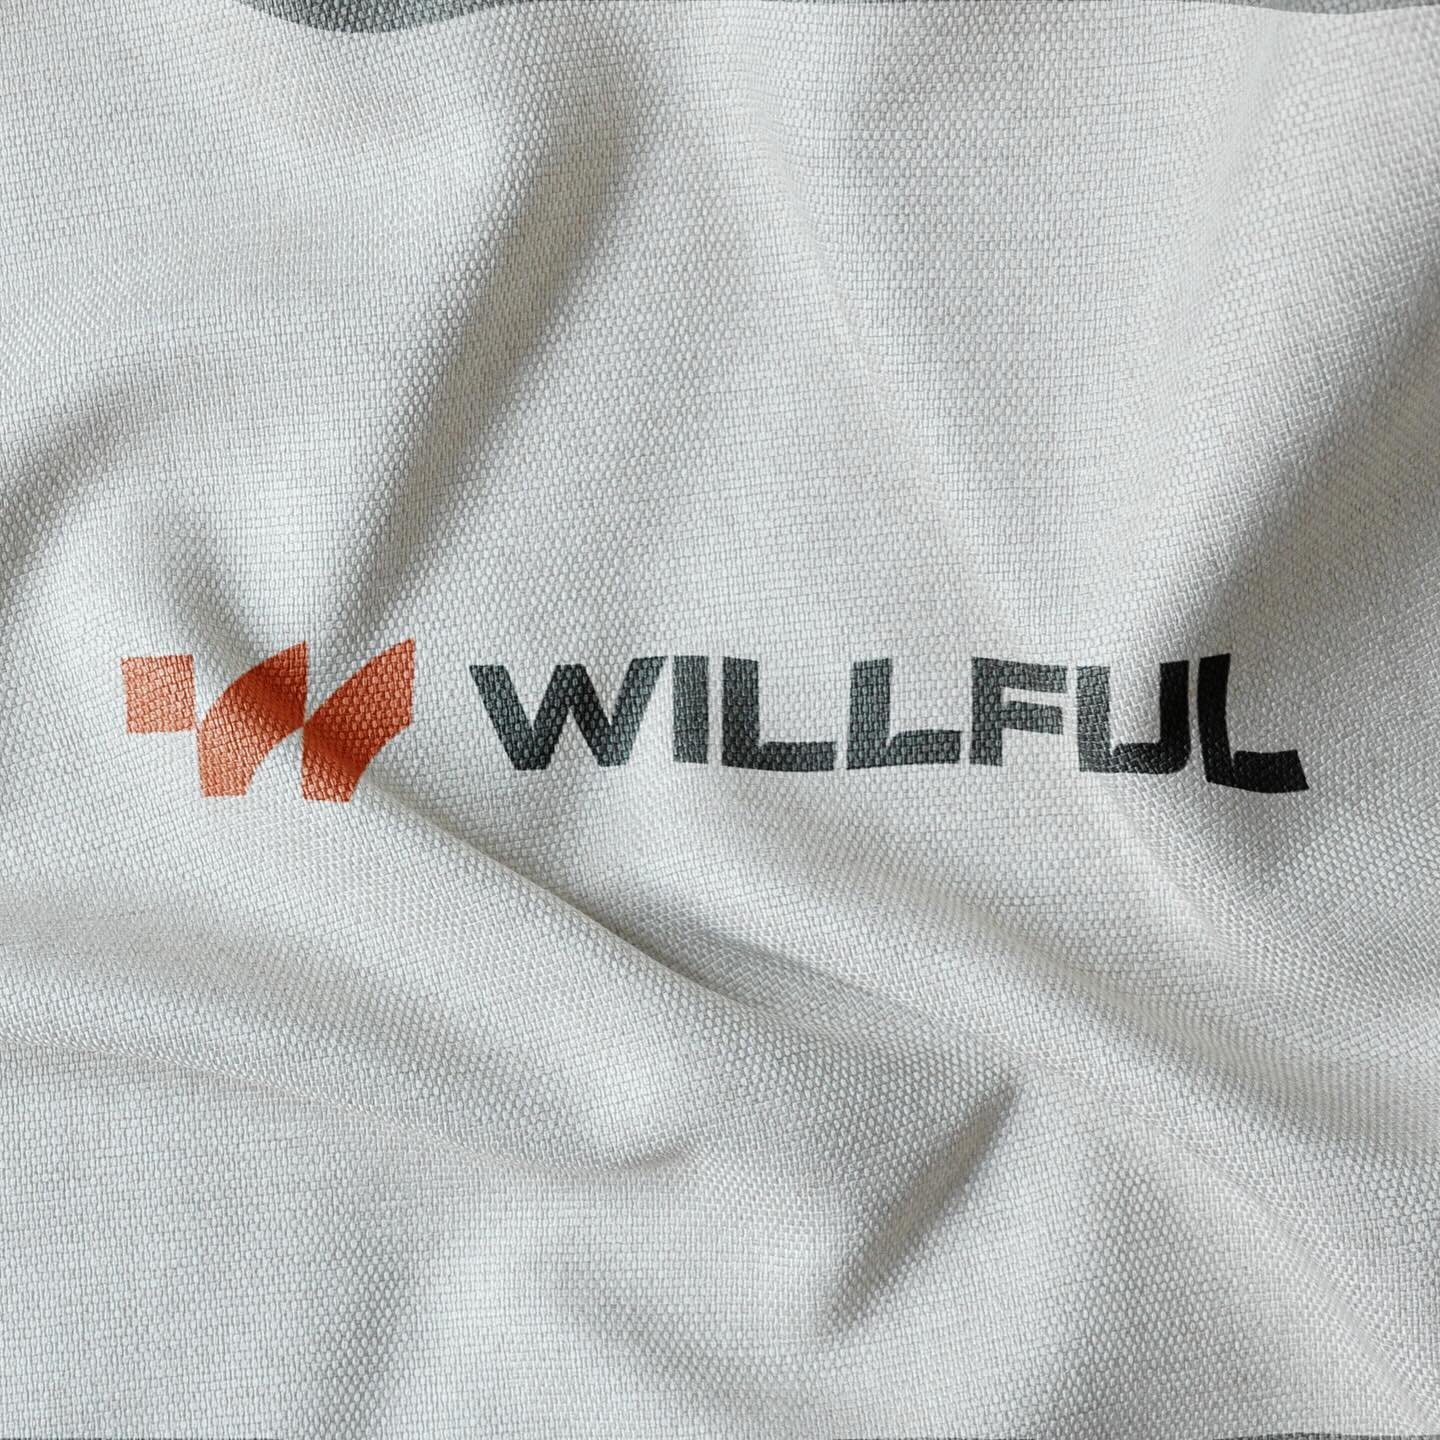 Introducing the new Willful. #rebranding #madebywillful #brandidentity #brandagency